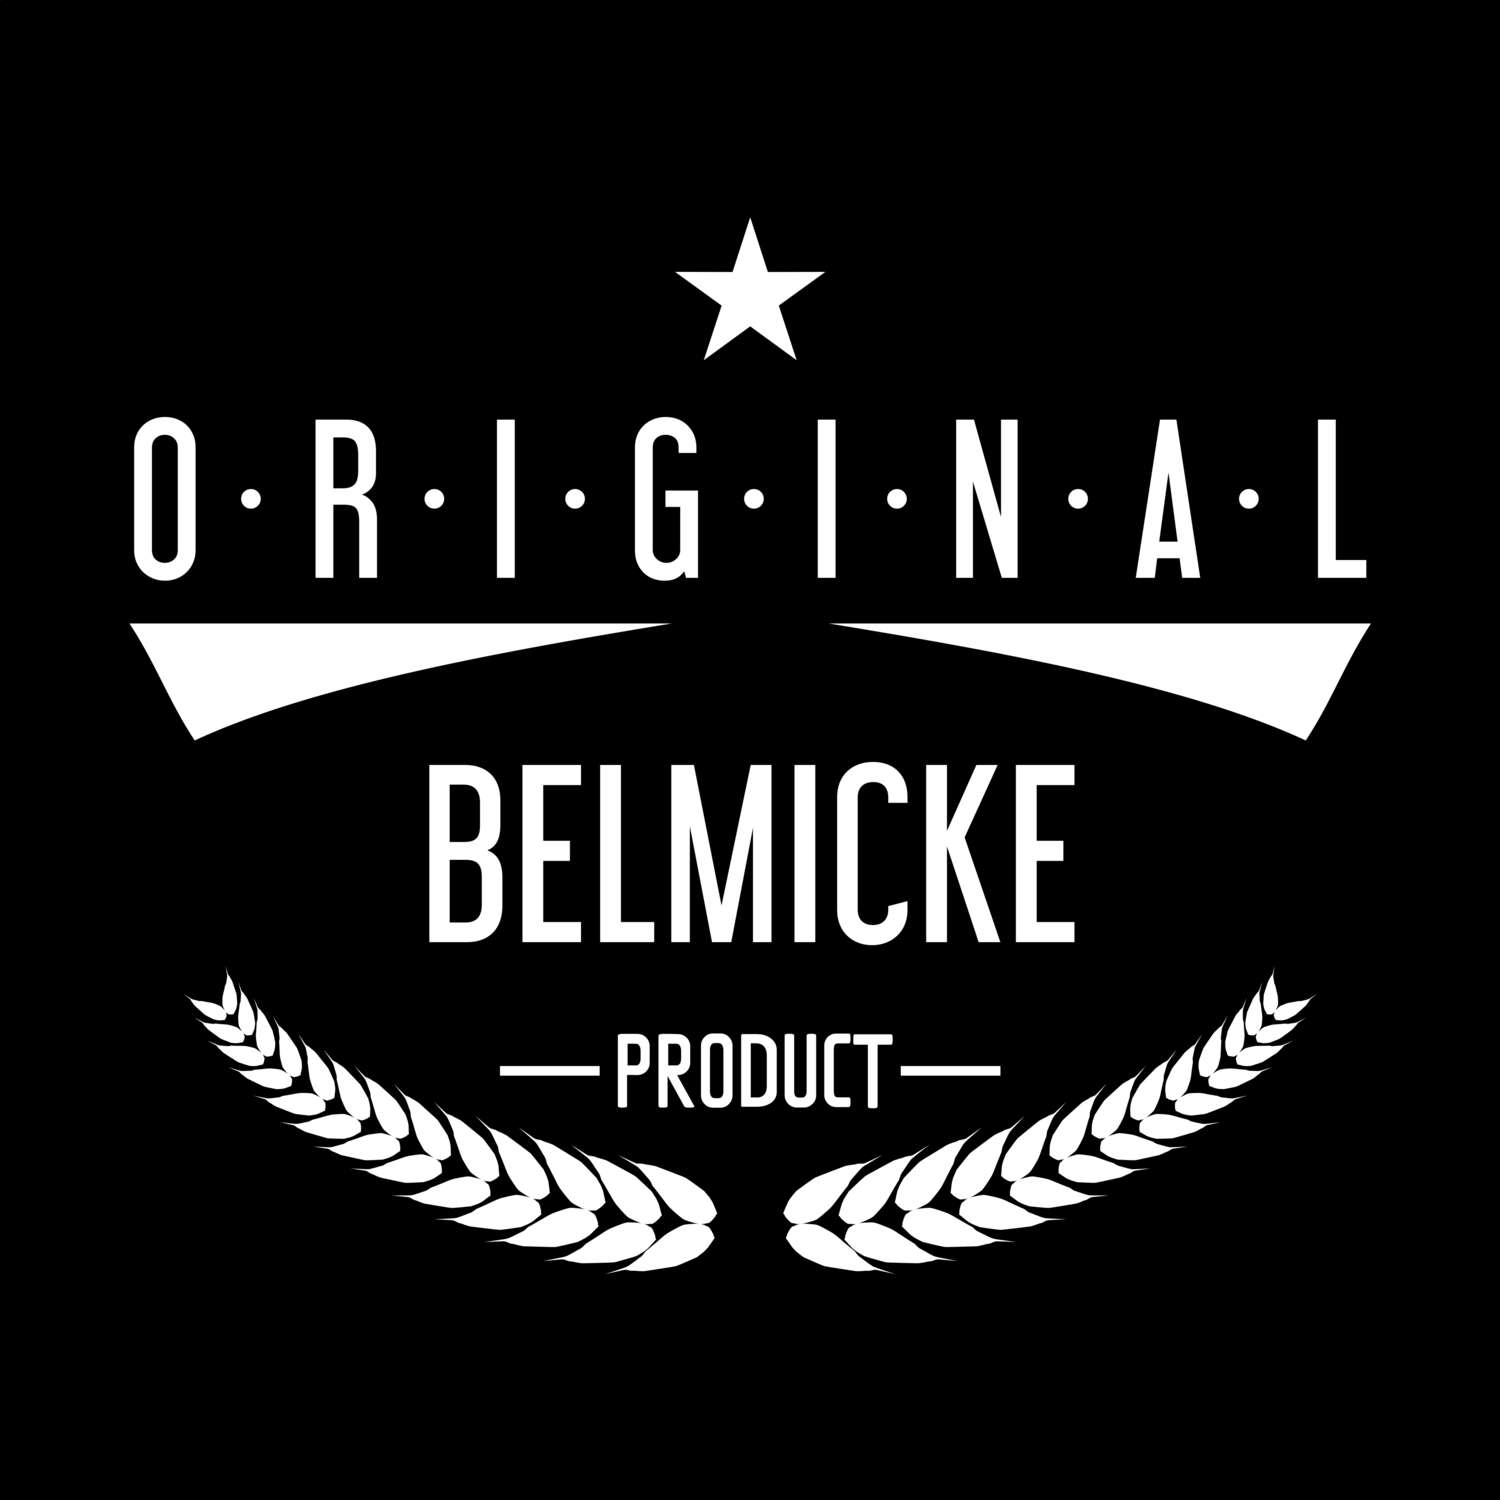 Belmicke T-Shirt »Original Product«